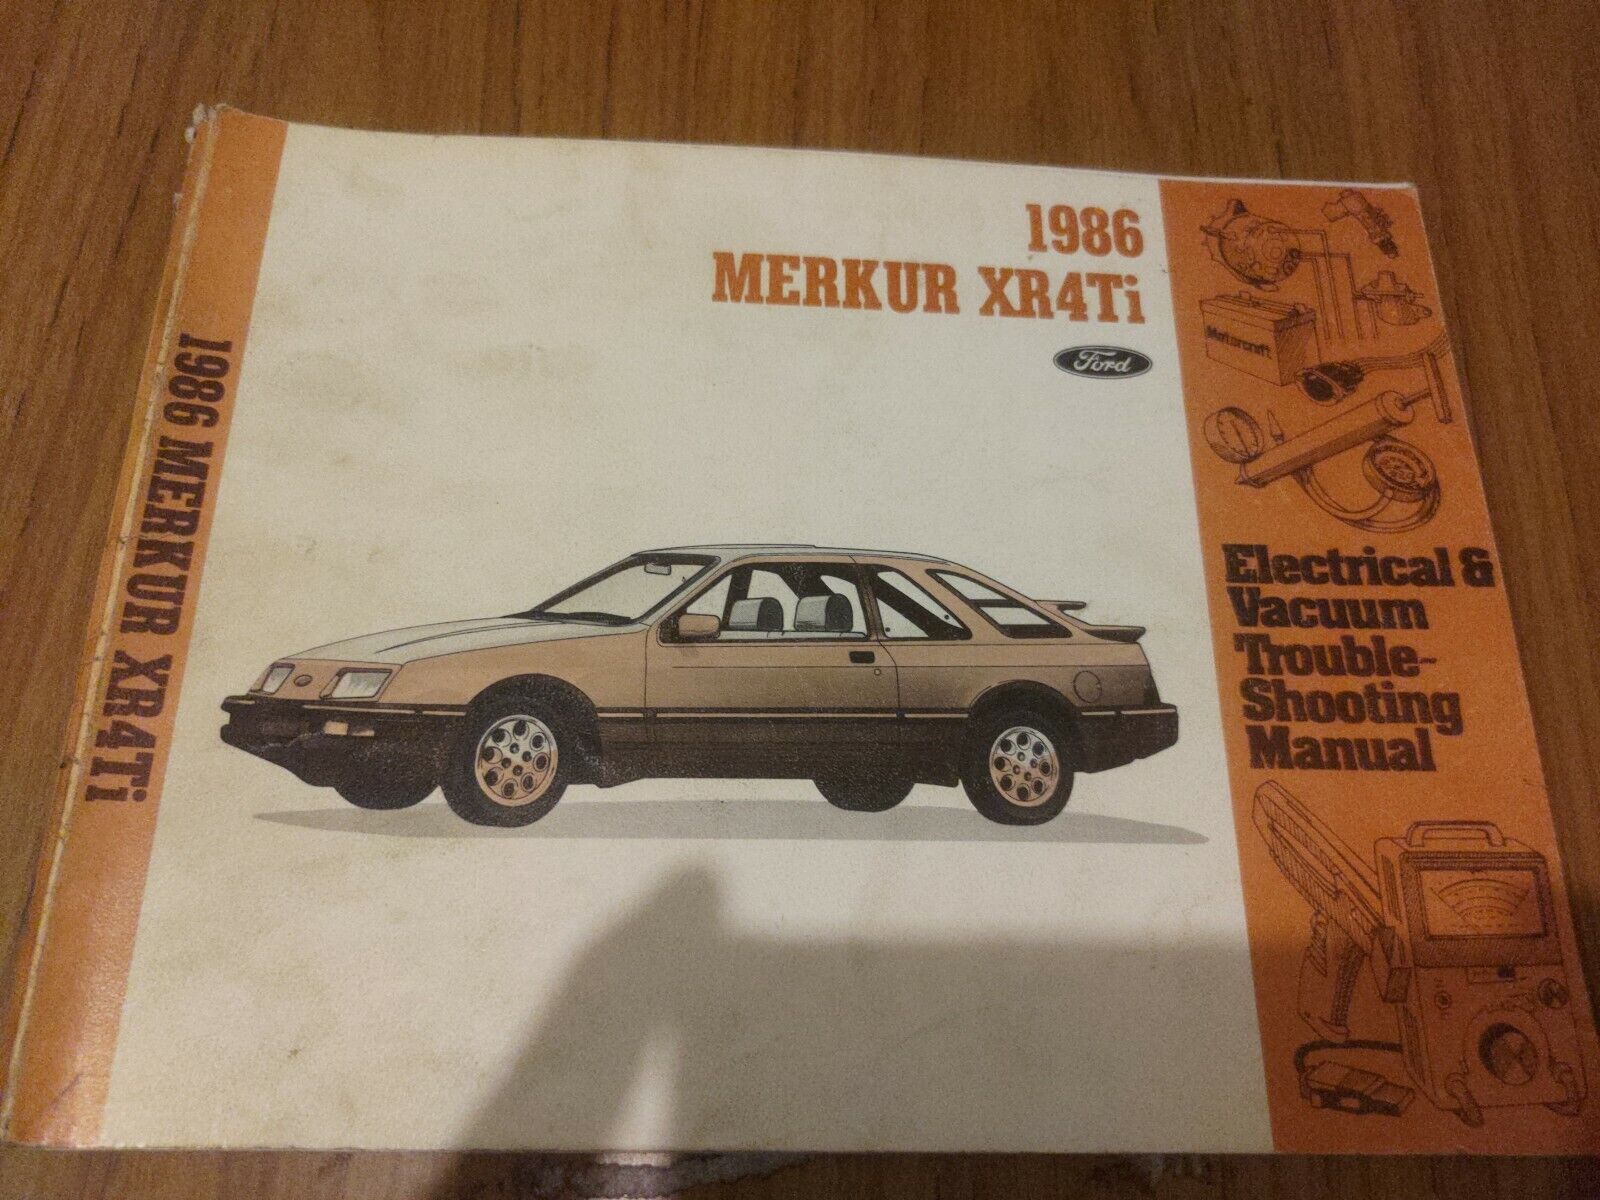 1986 Merkur XR4Ti Electrical & Vacuum Troubleshooting Manual